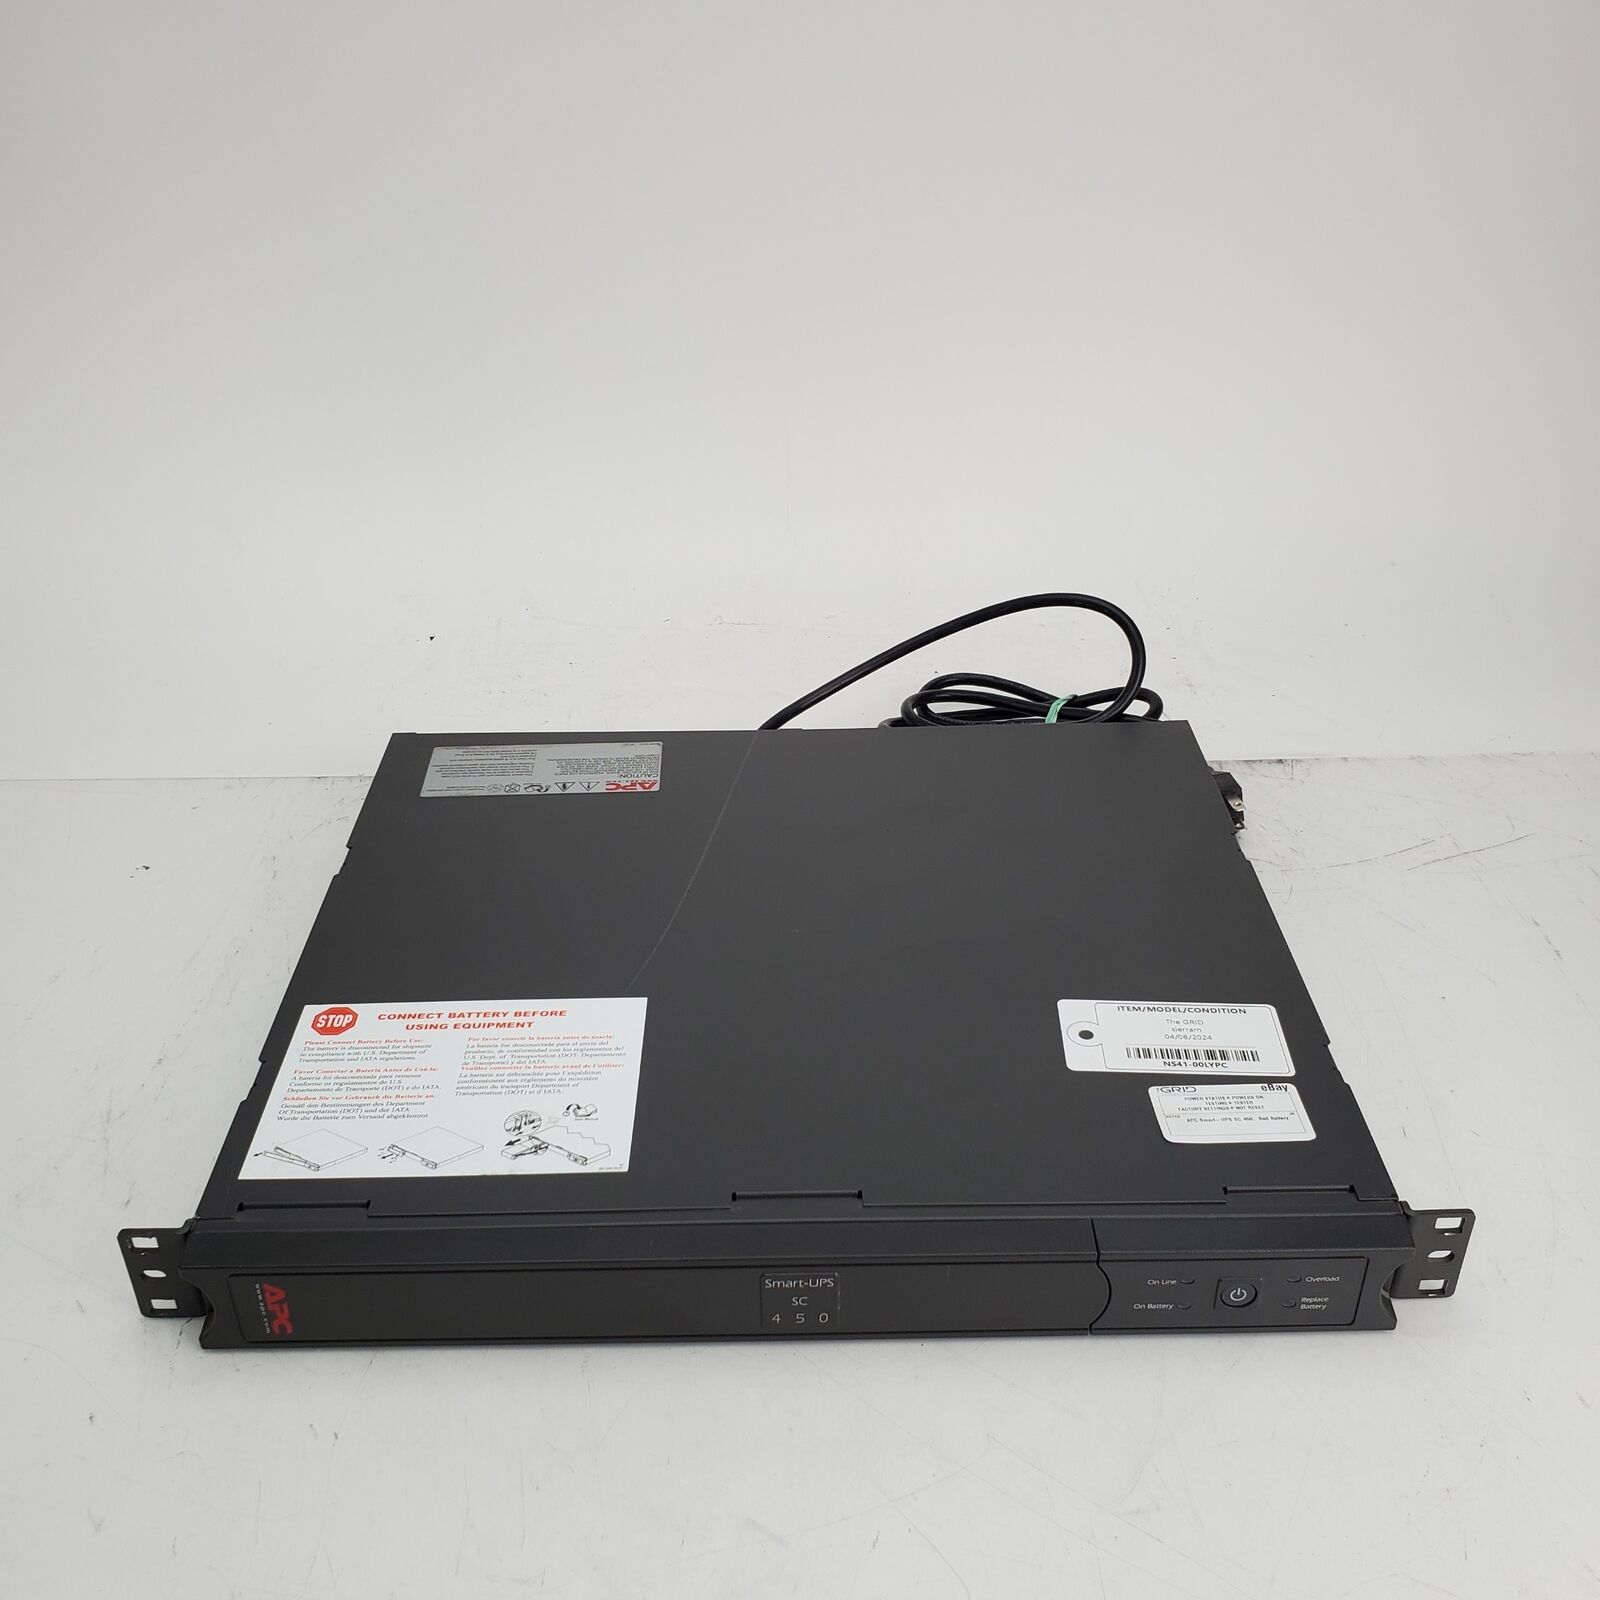 APC Smart-UPS SC 450VA 120V 1U Power Supply SC450RM1U - Bad Battery